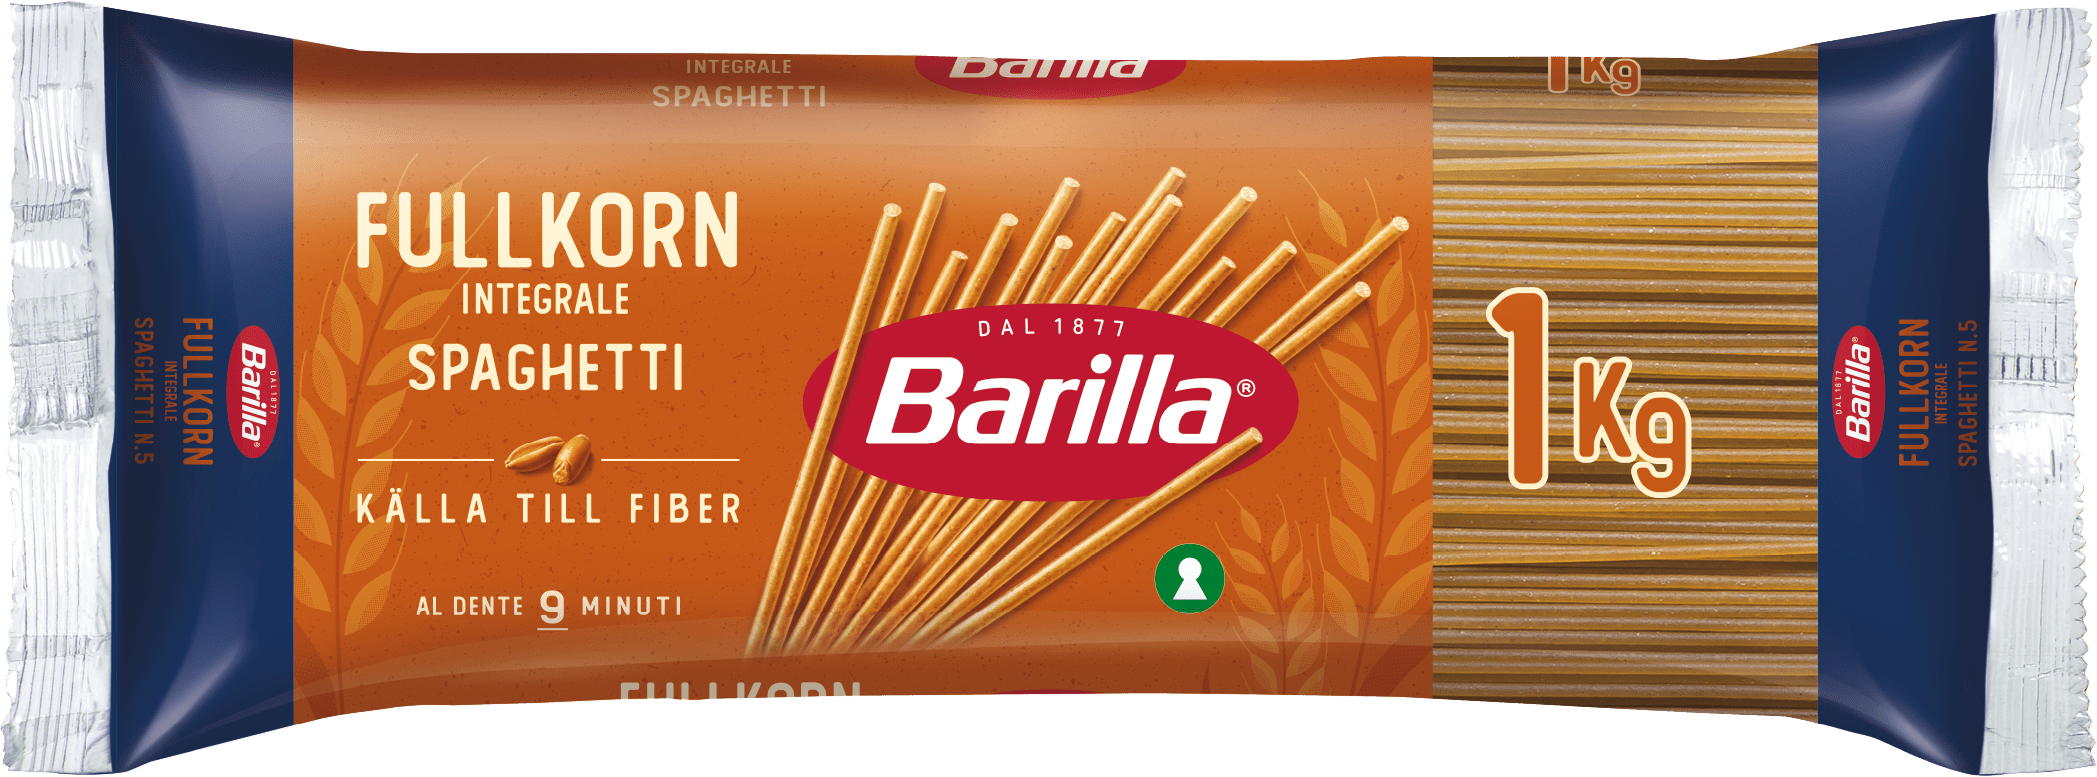 Spaghetti Fullkorn